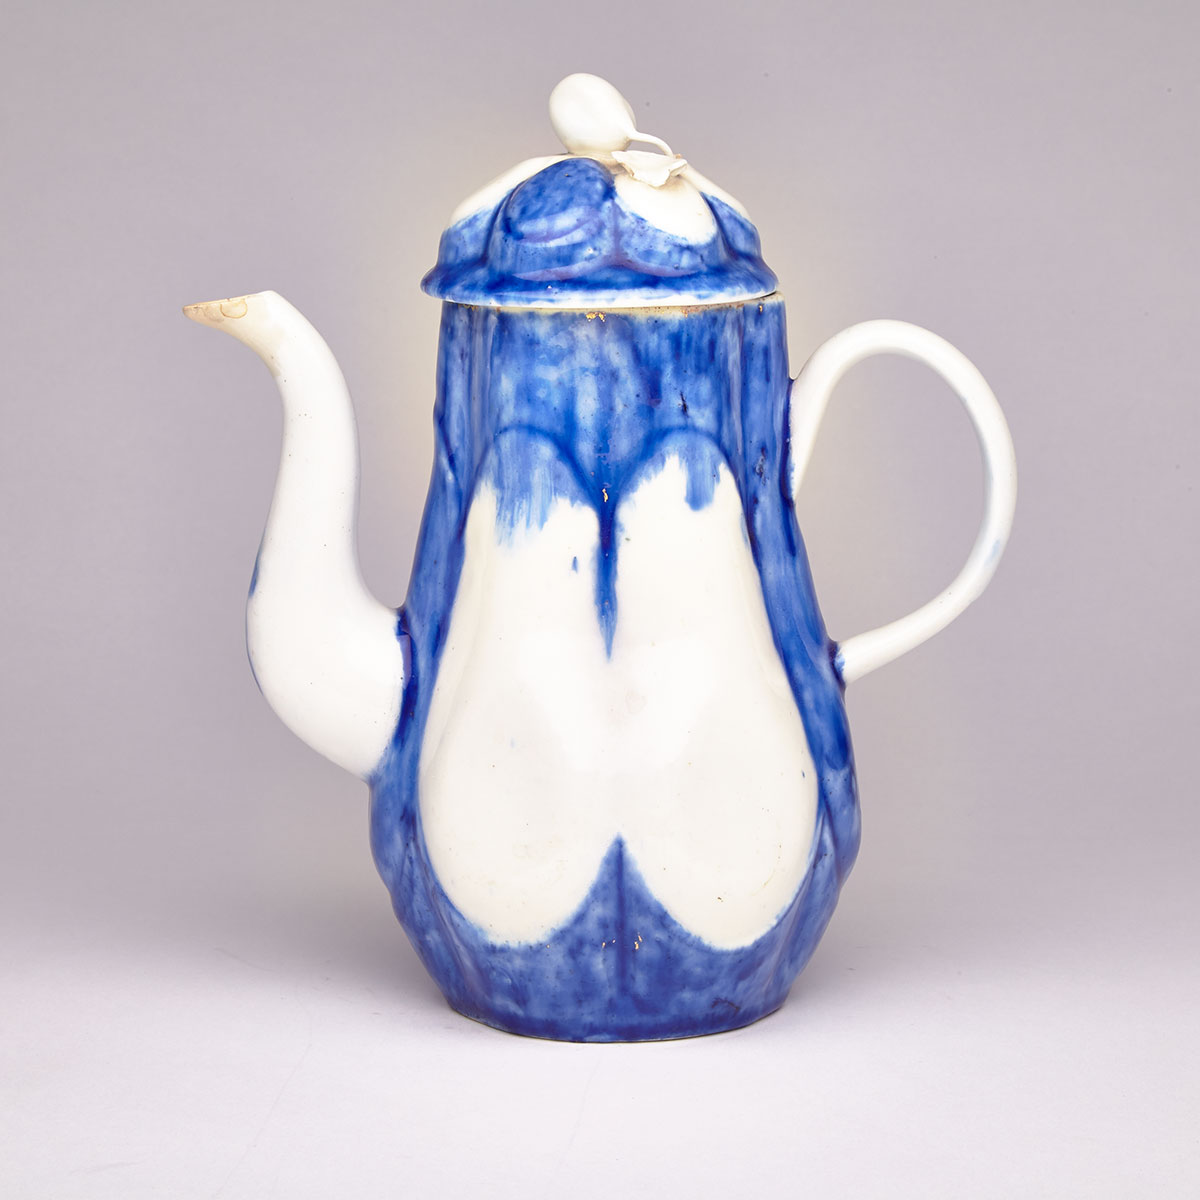 West Pans ‘Littler’s Blue’ Ground Coffee Pot, c.1770